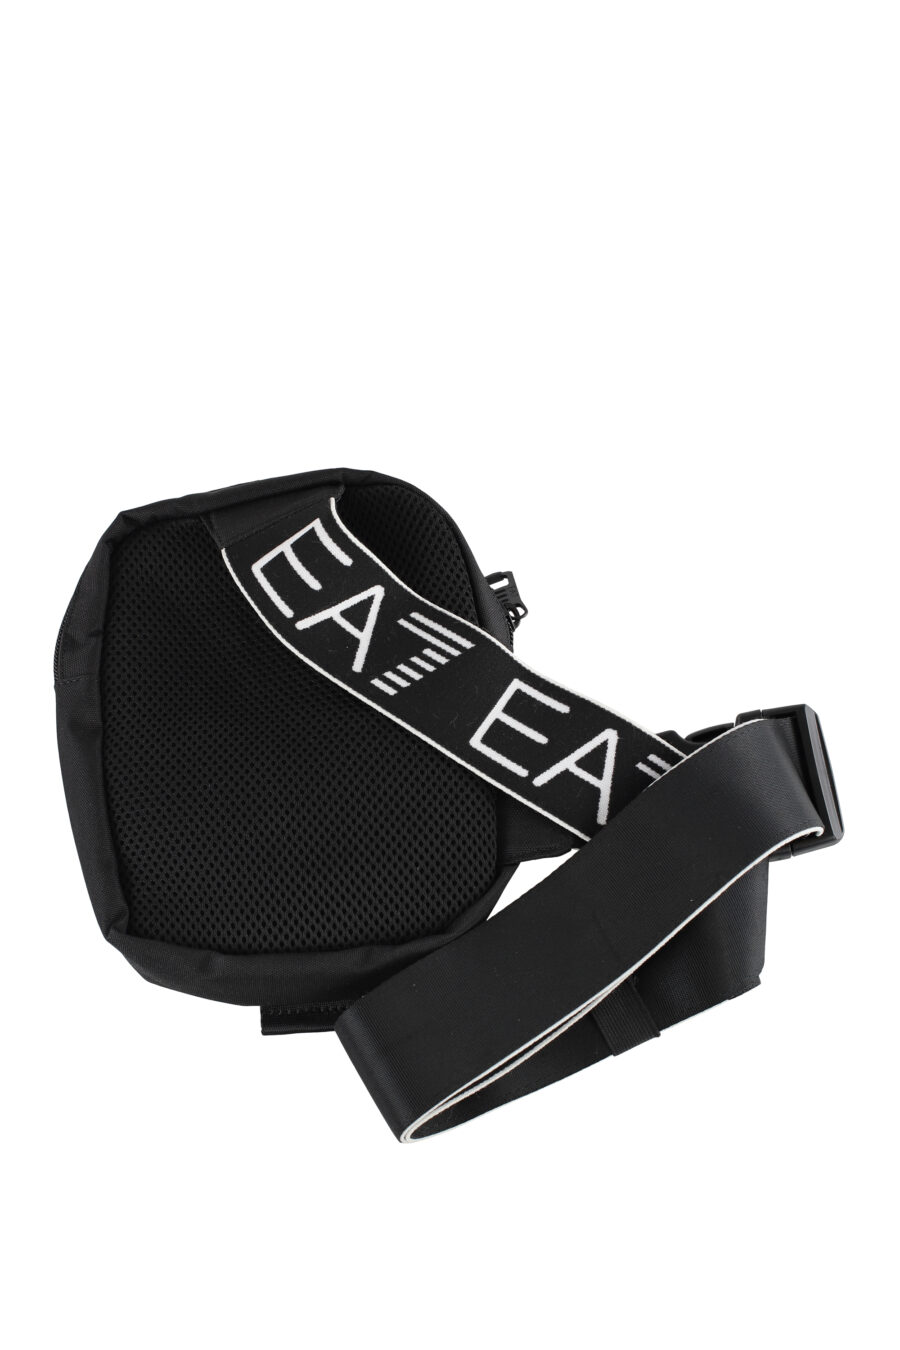 Black crossbody bag with "lux identity" logo on strap - IMG 5144